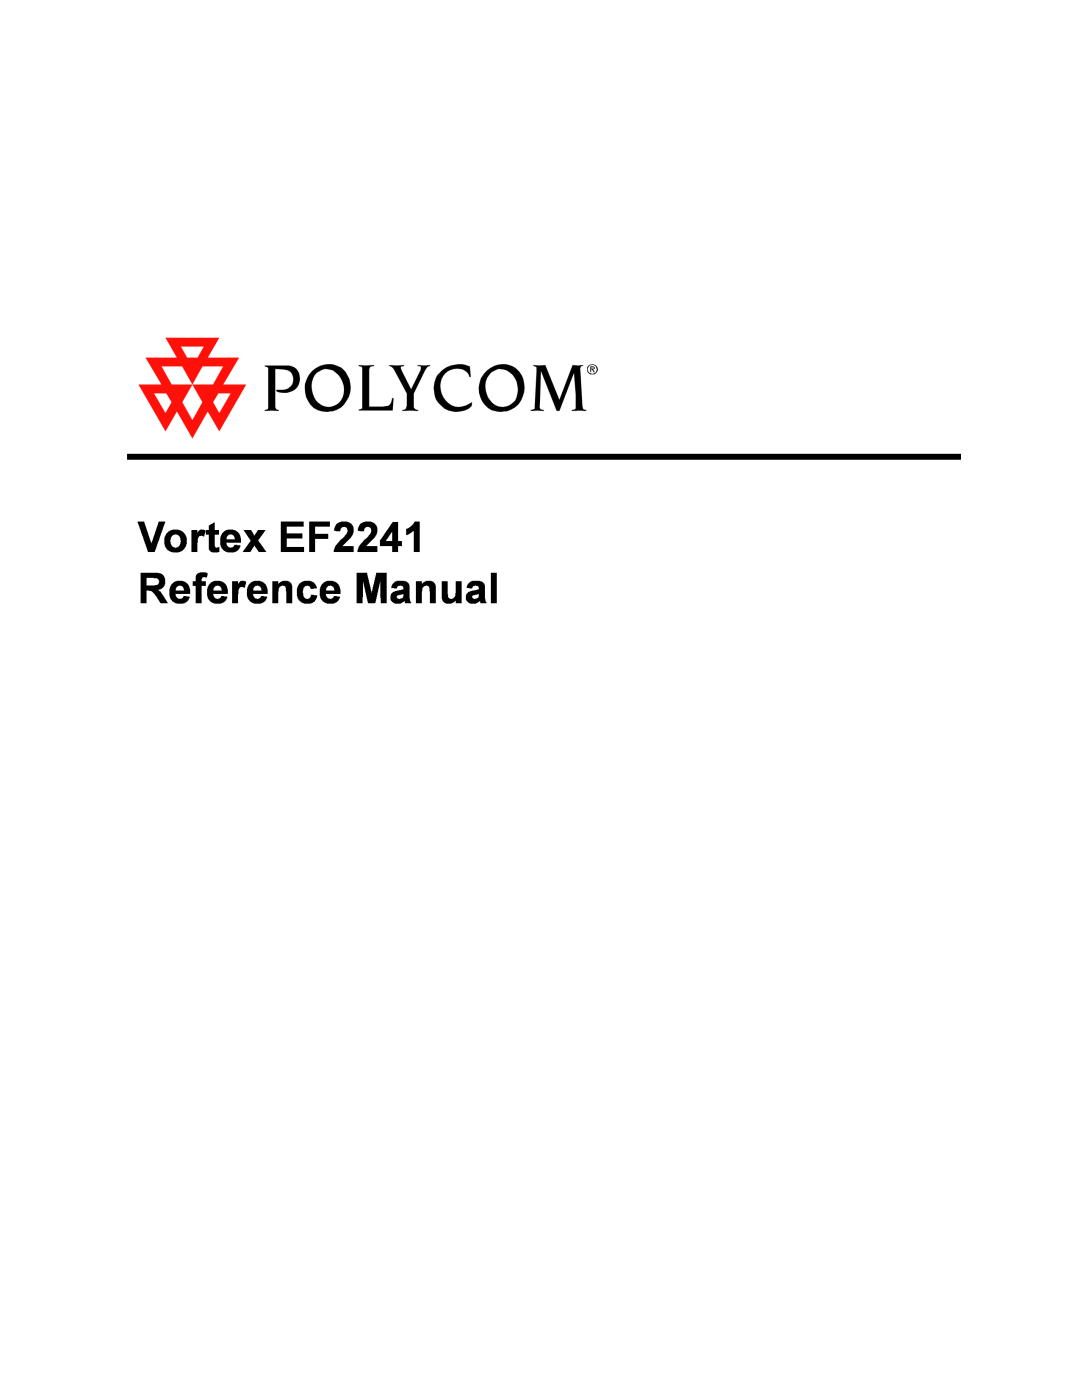 Polycom manual Vortex EF2241 Reference Manual 